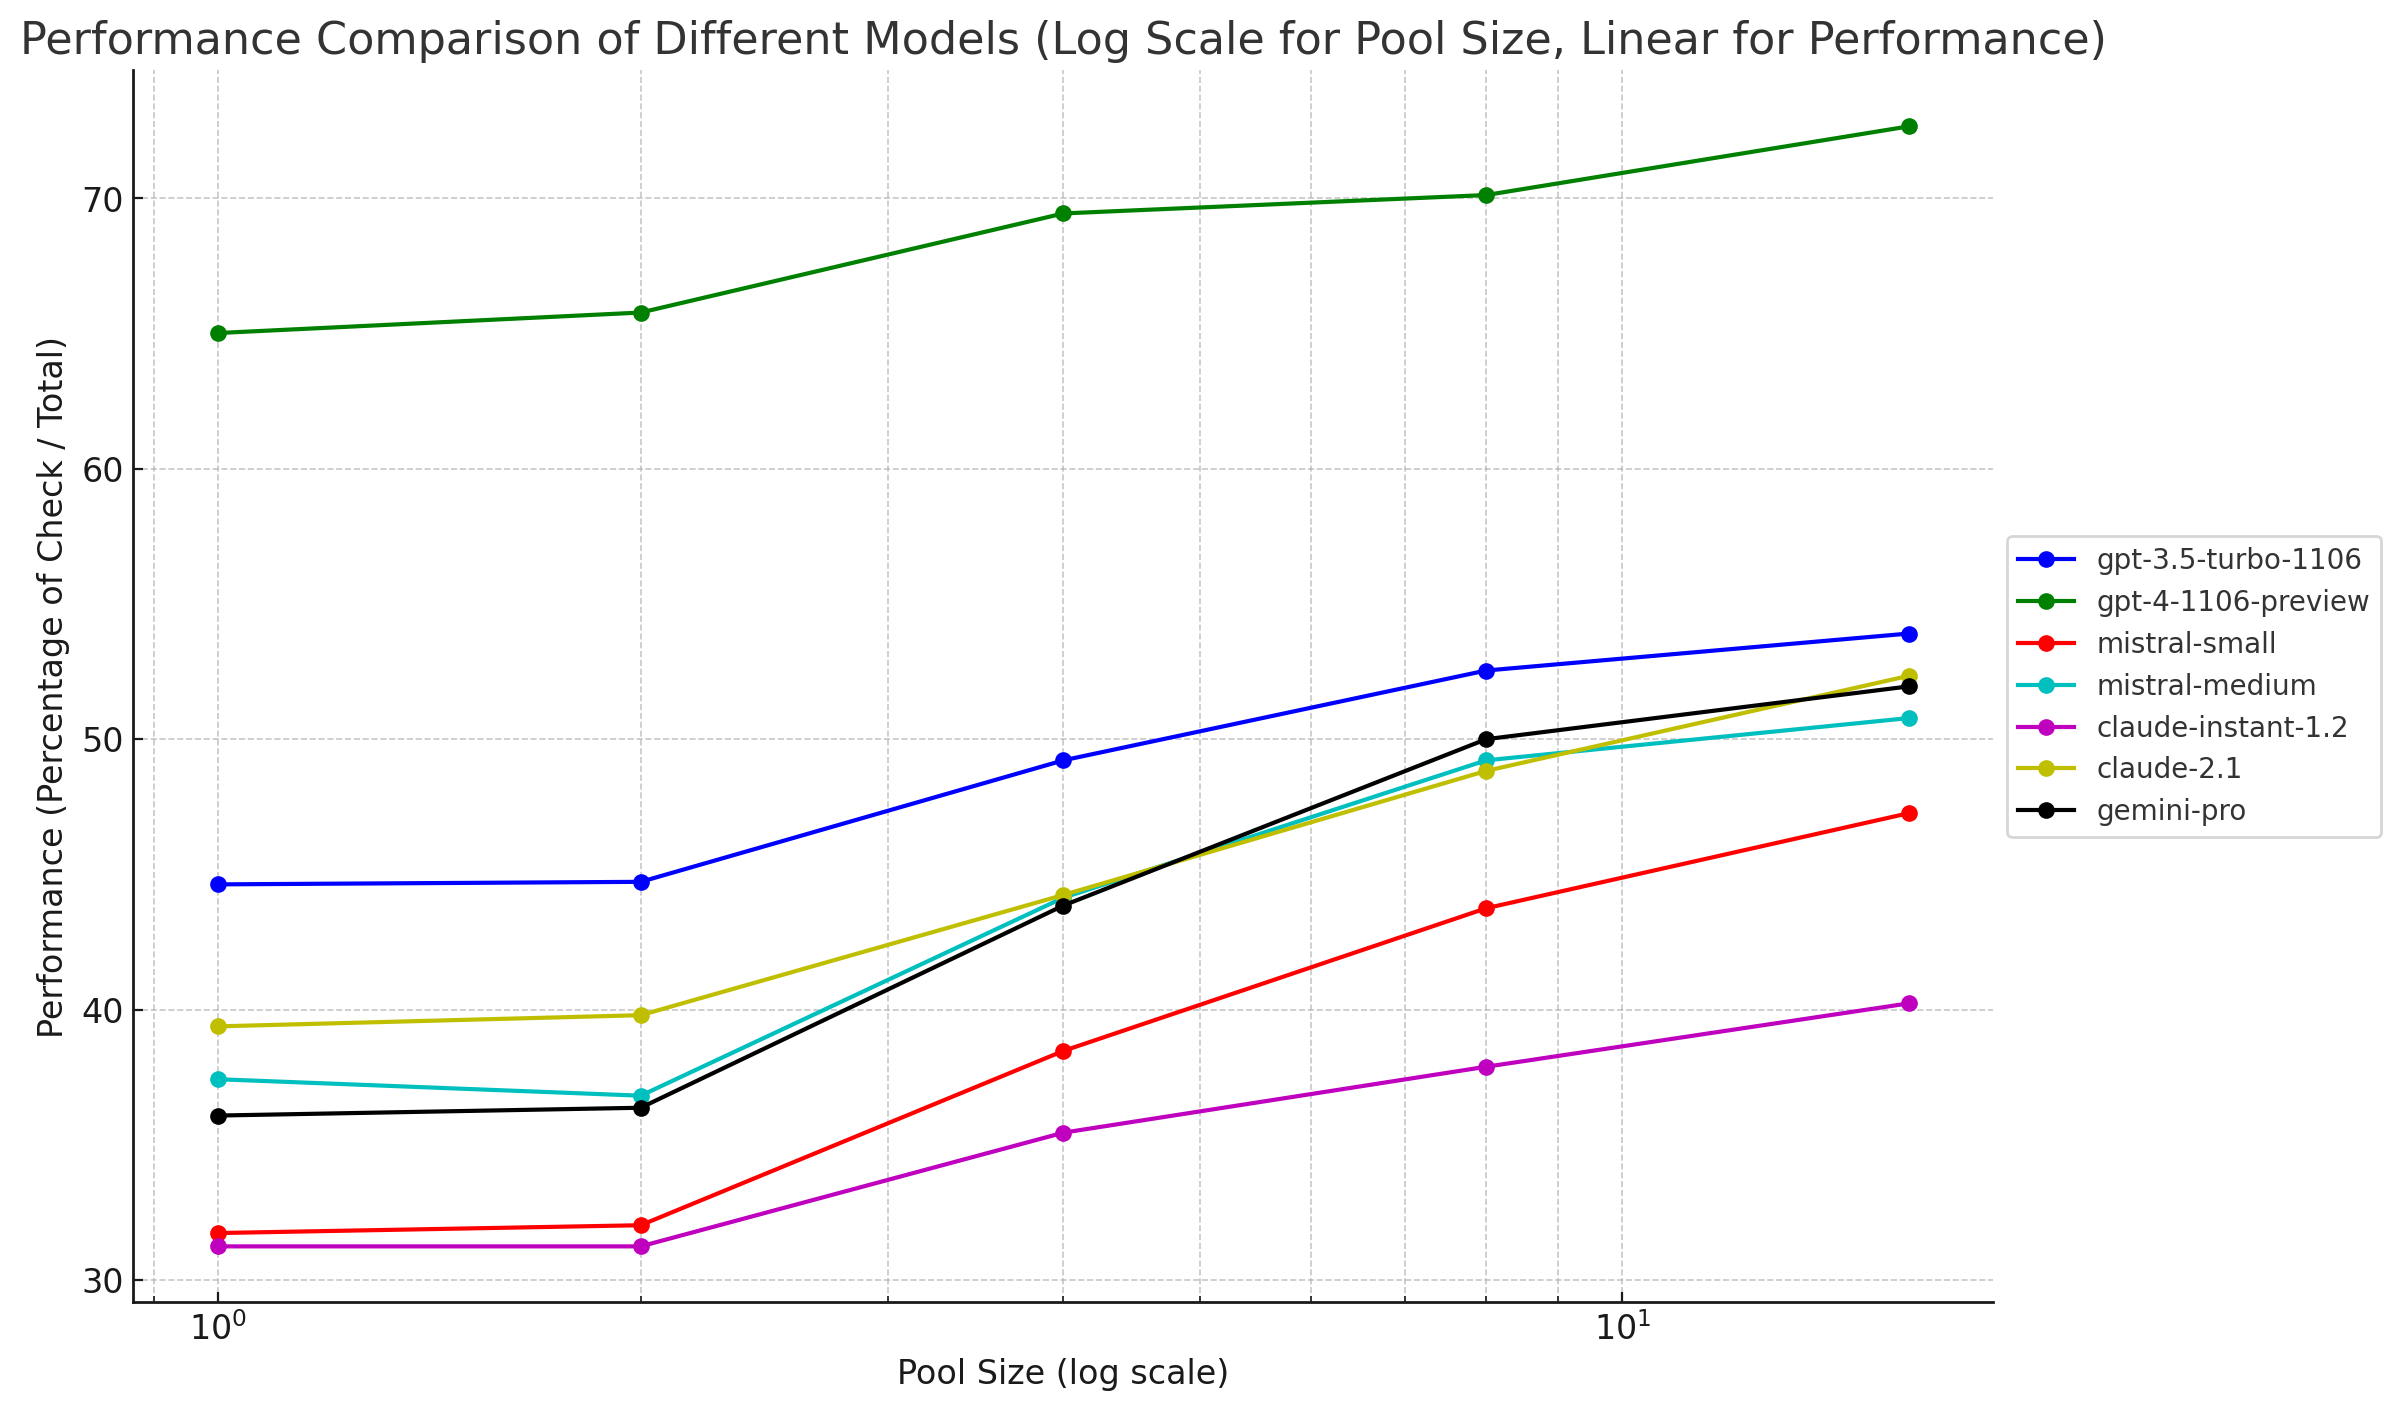 A fair comparison of modern models' reasoning capabilities